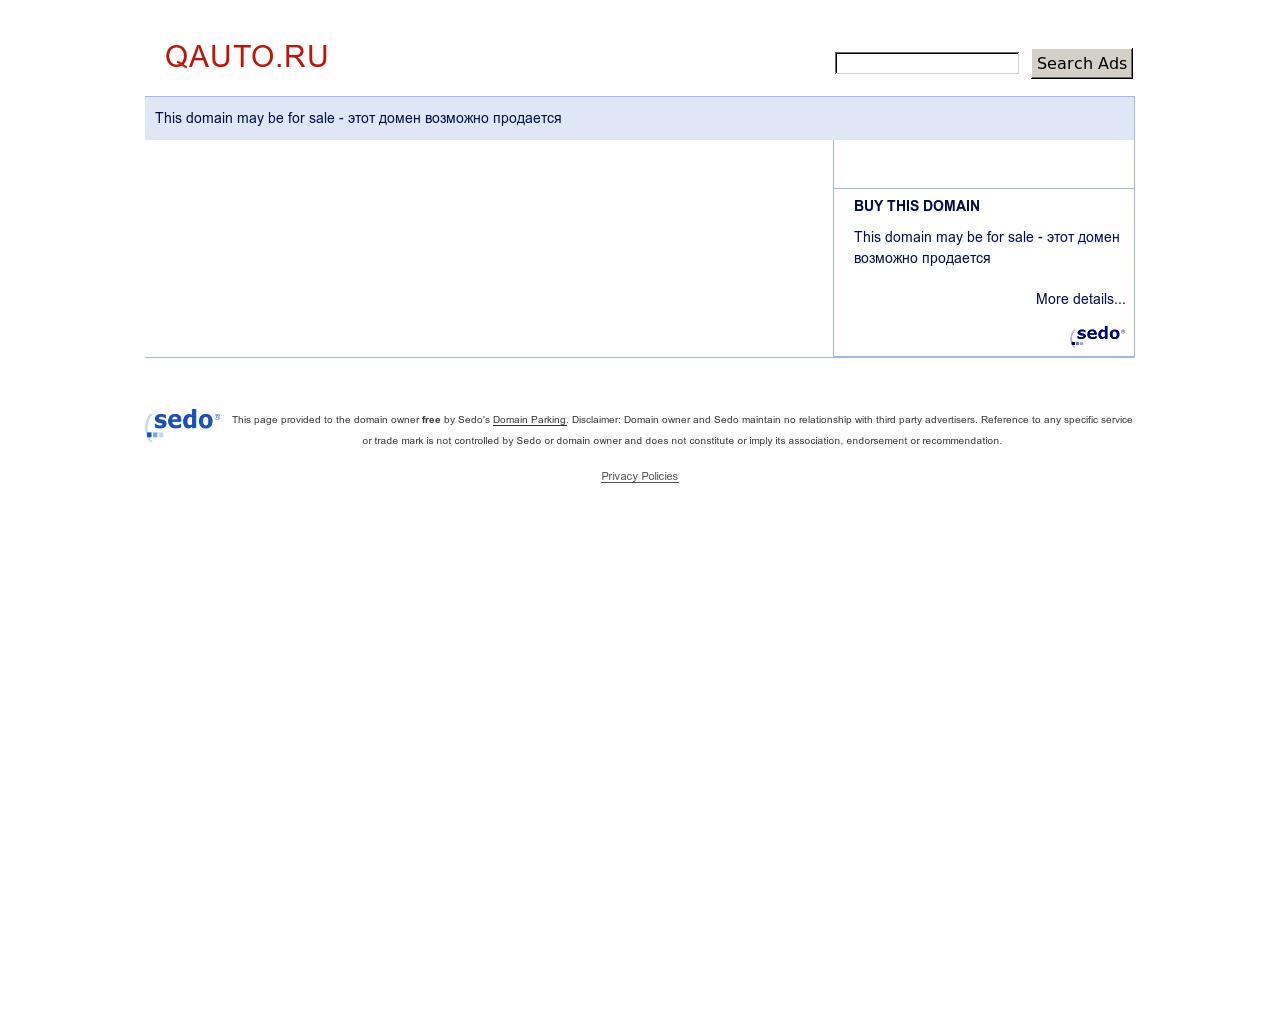 Изображение сайта qauto.ru в разрешении 1280x1024